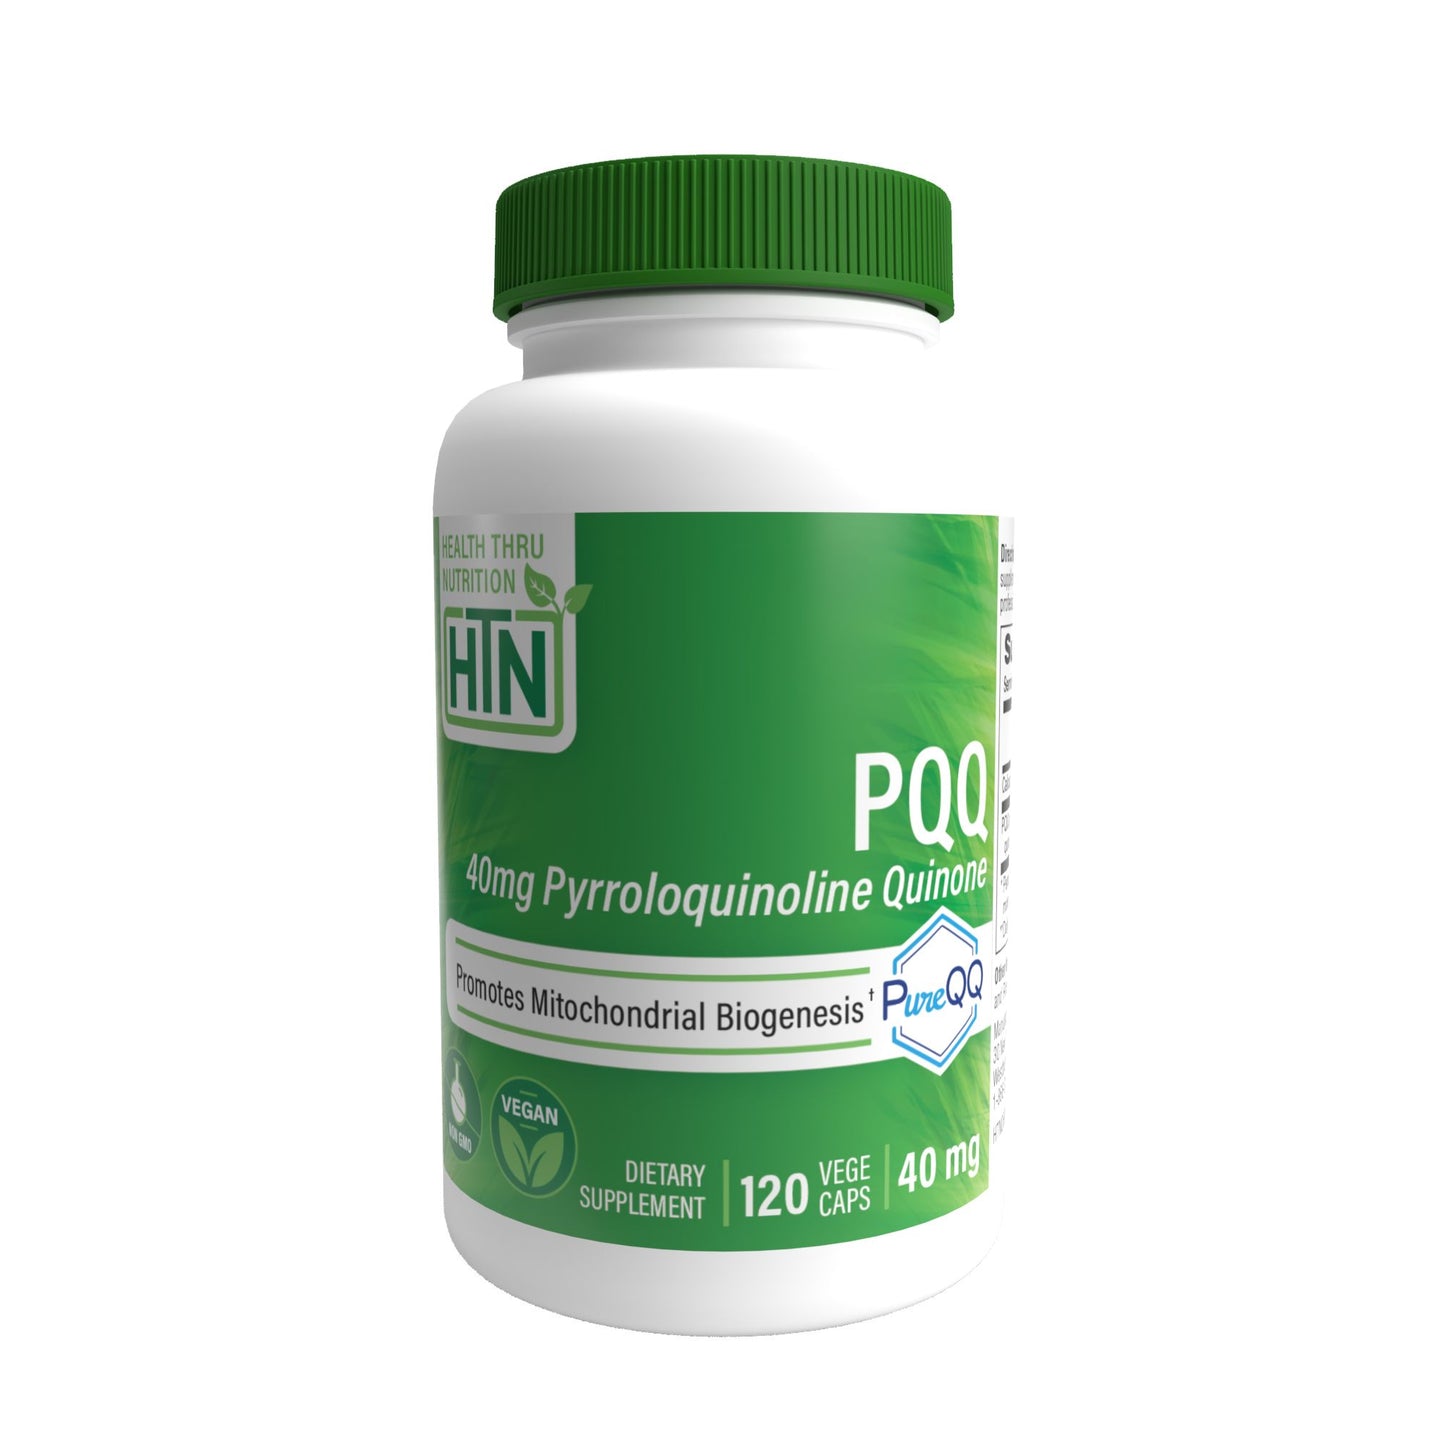 Health Thru Nutrition PQQ Pyrroloquinoline Quinone (as PureQQ™) 40mg (NON-GMO) 120 Vegecaps Promotes Mitochondrial Biogenesis